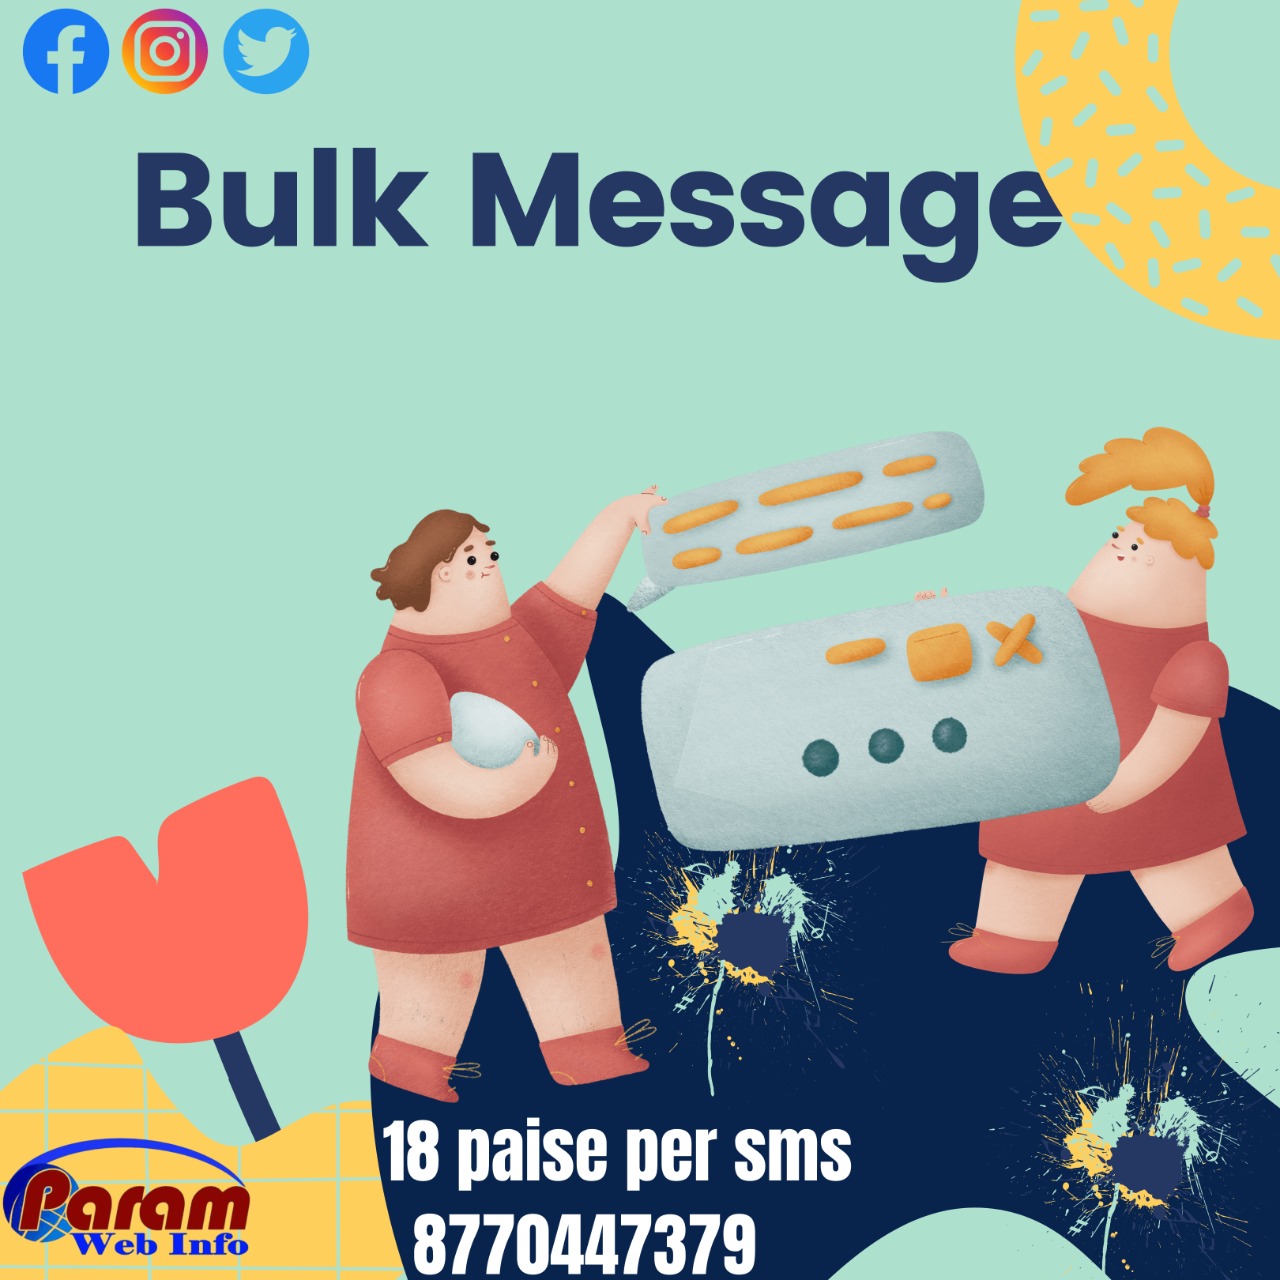 bulk sms marketing